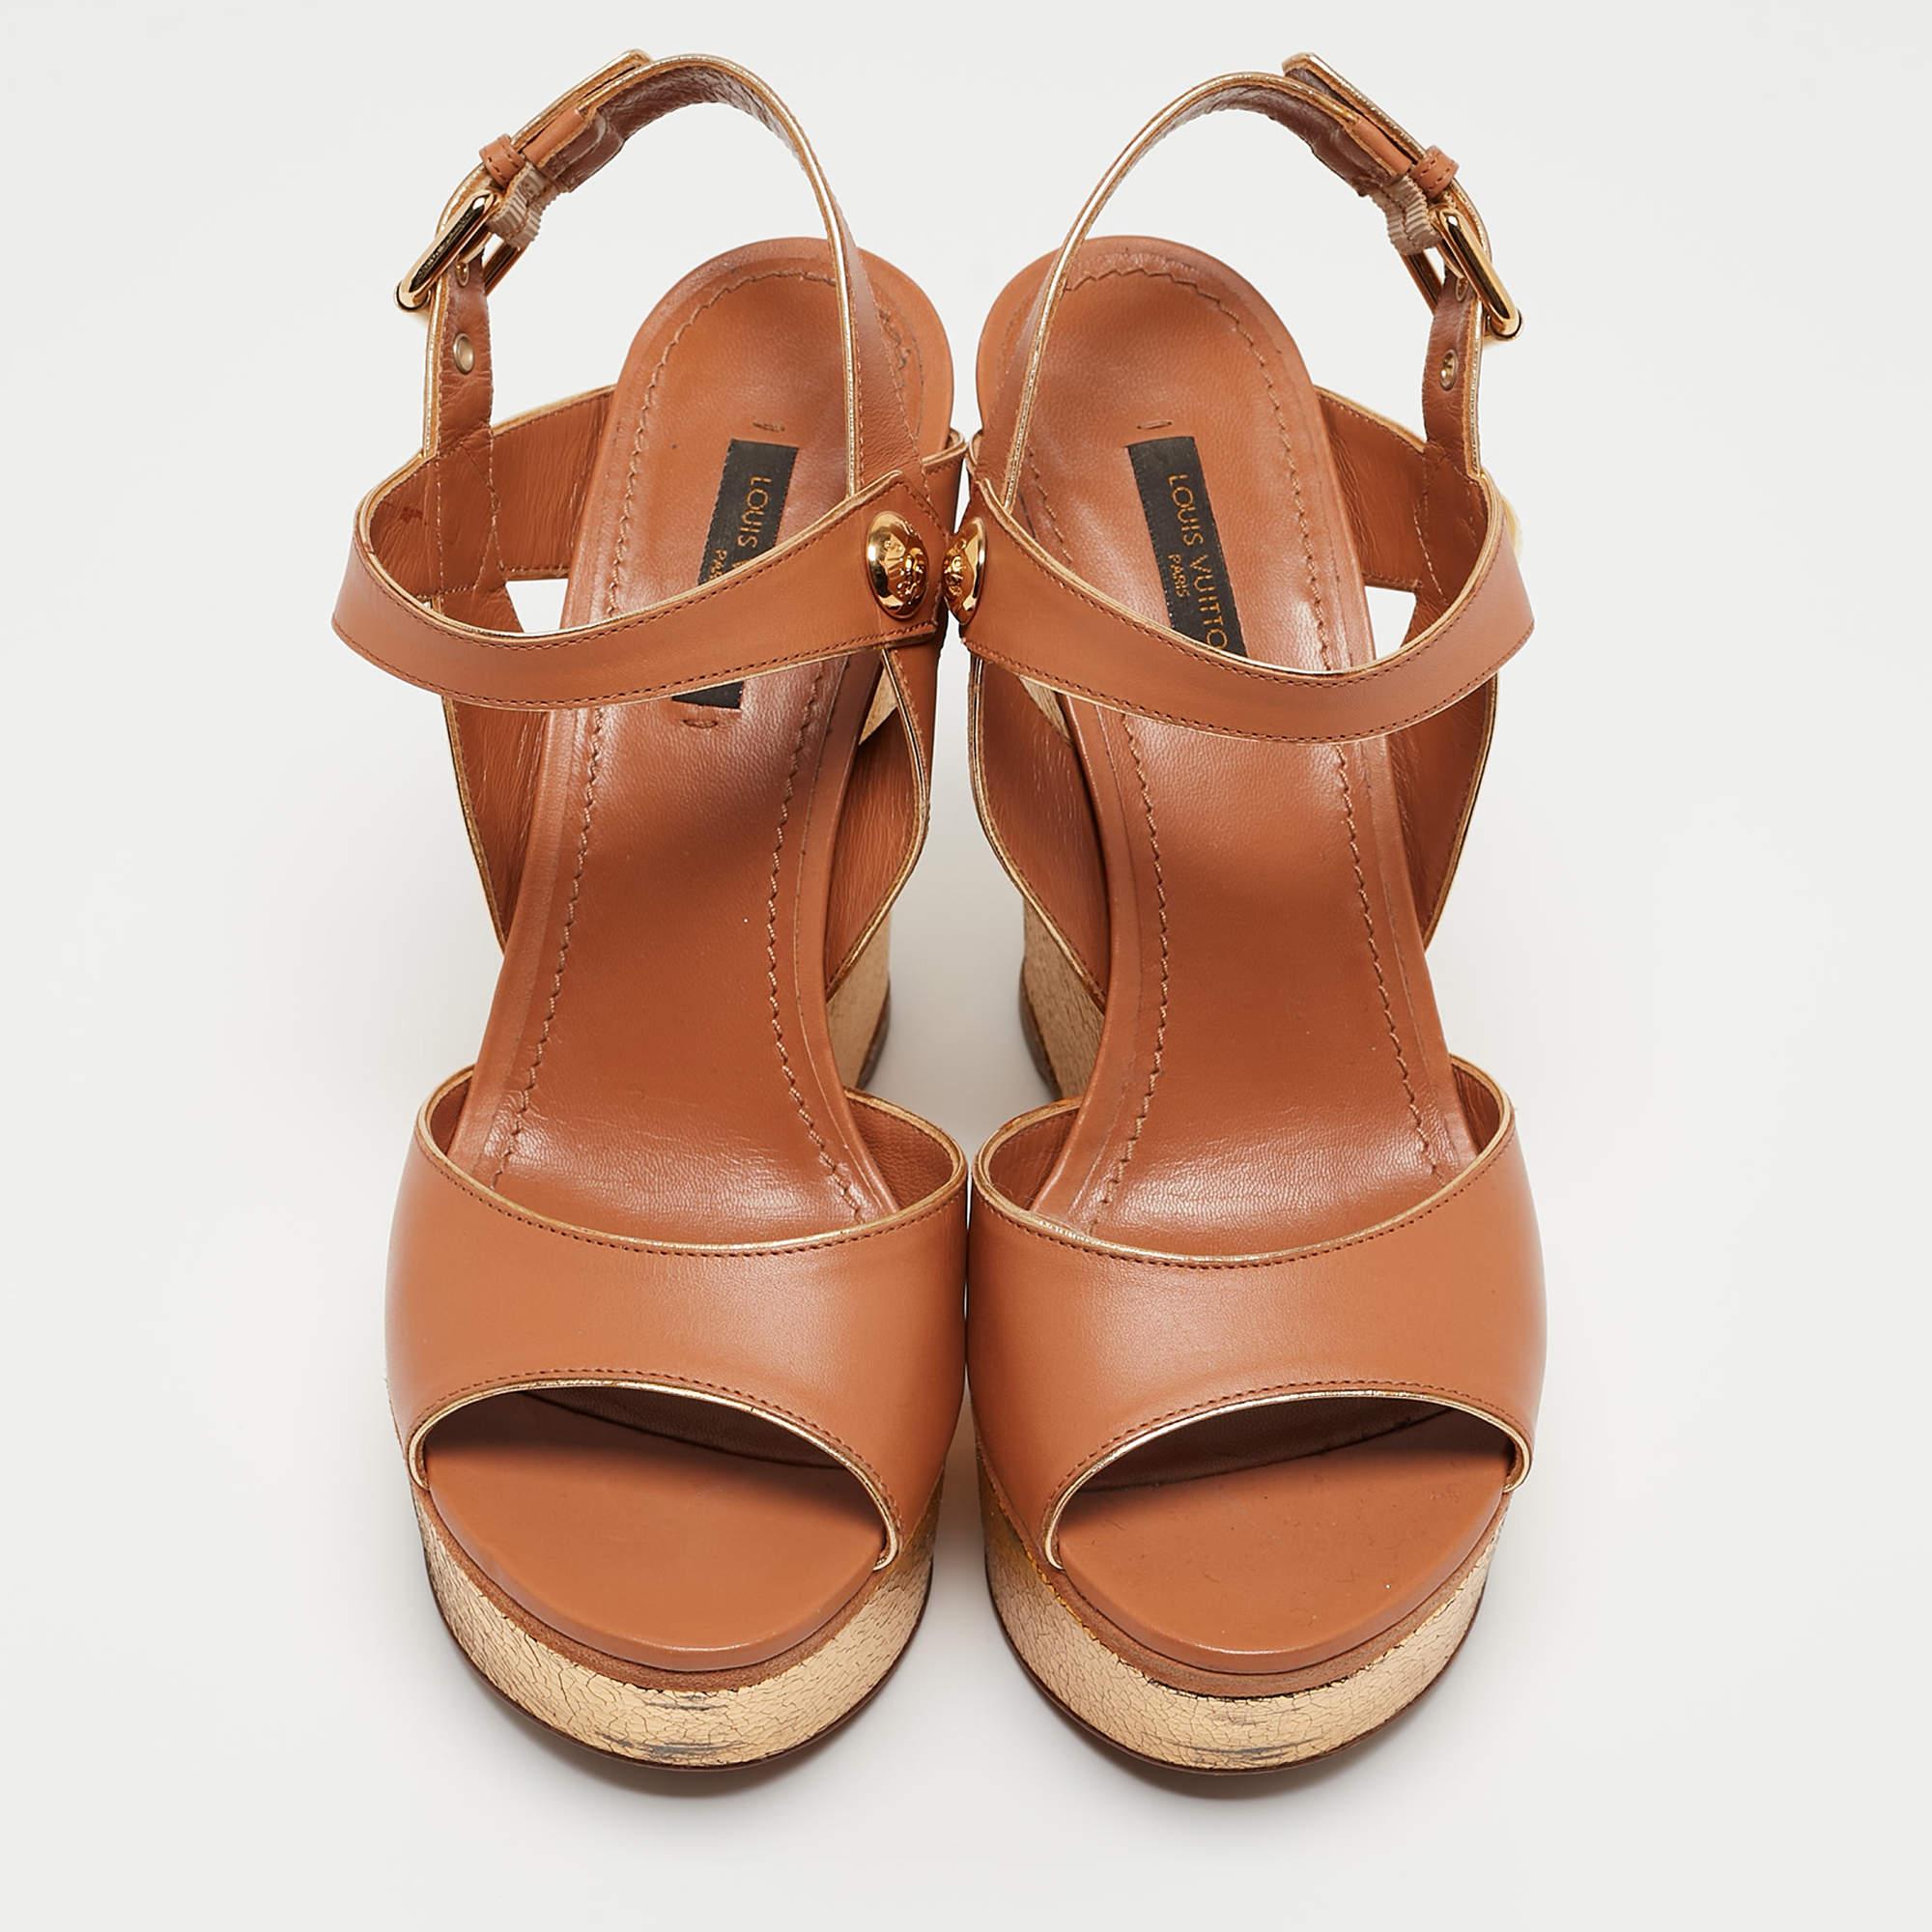 Louis Vuitton Beige Leather Wedge Sandals Size 38 In Good Condition For Sale In Dubai, Al Qouz 2